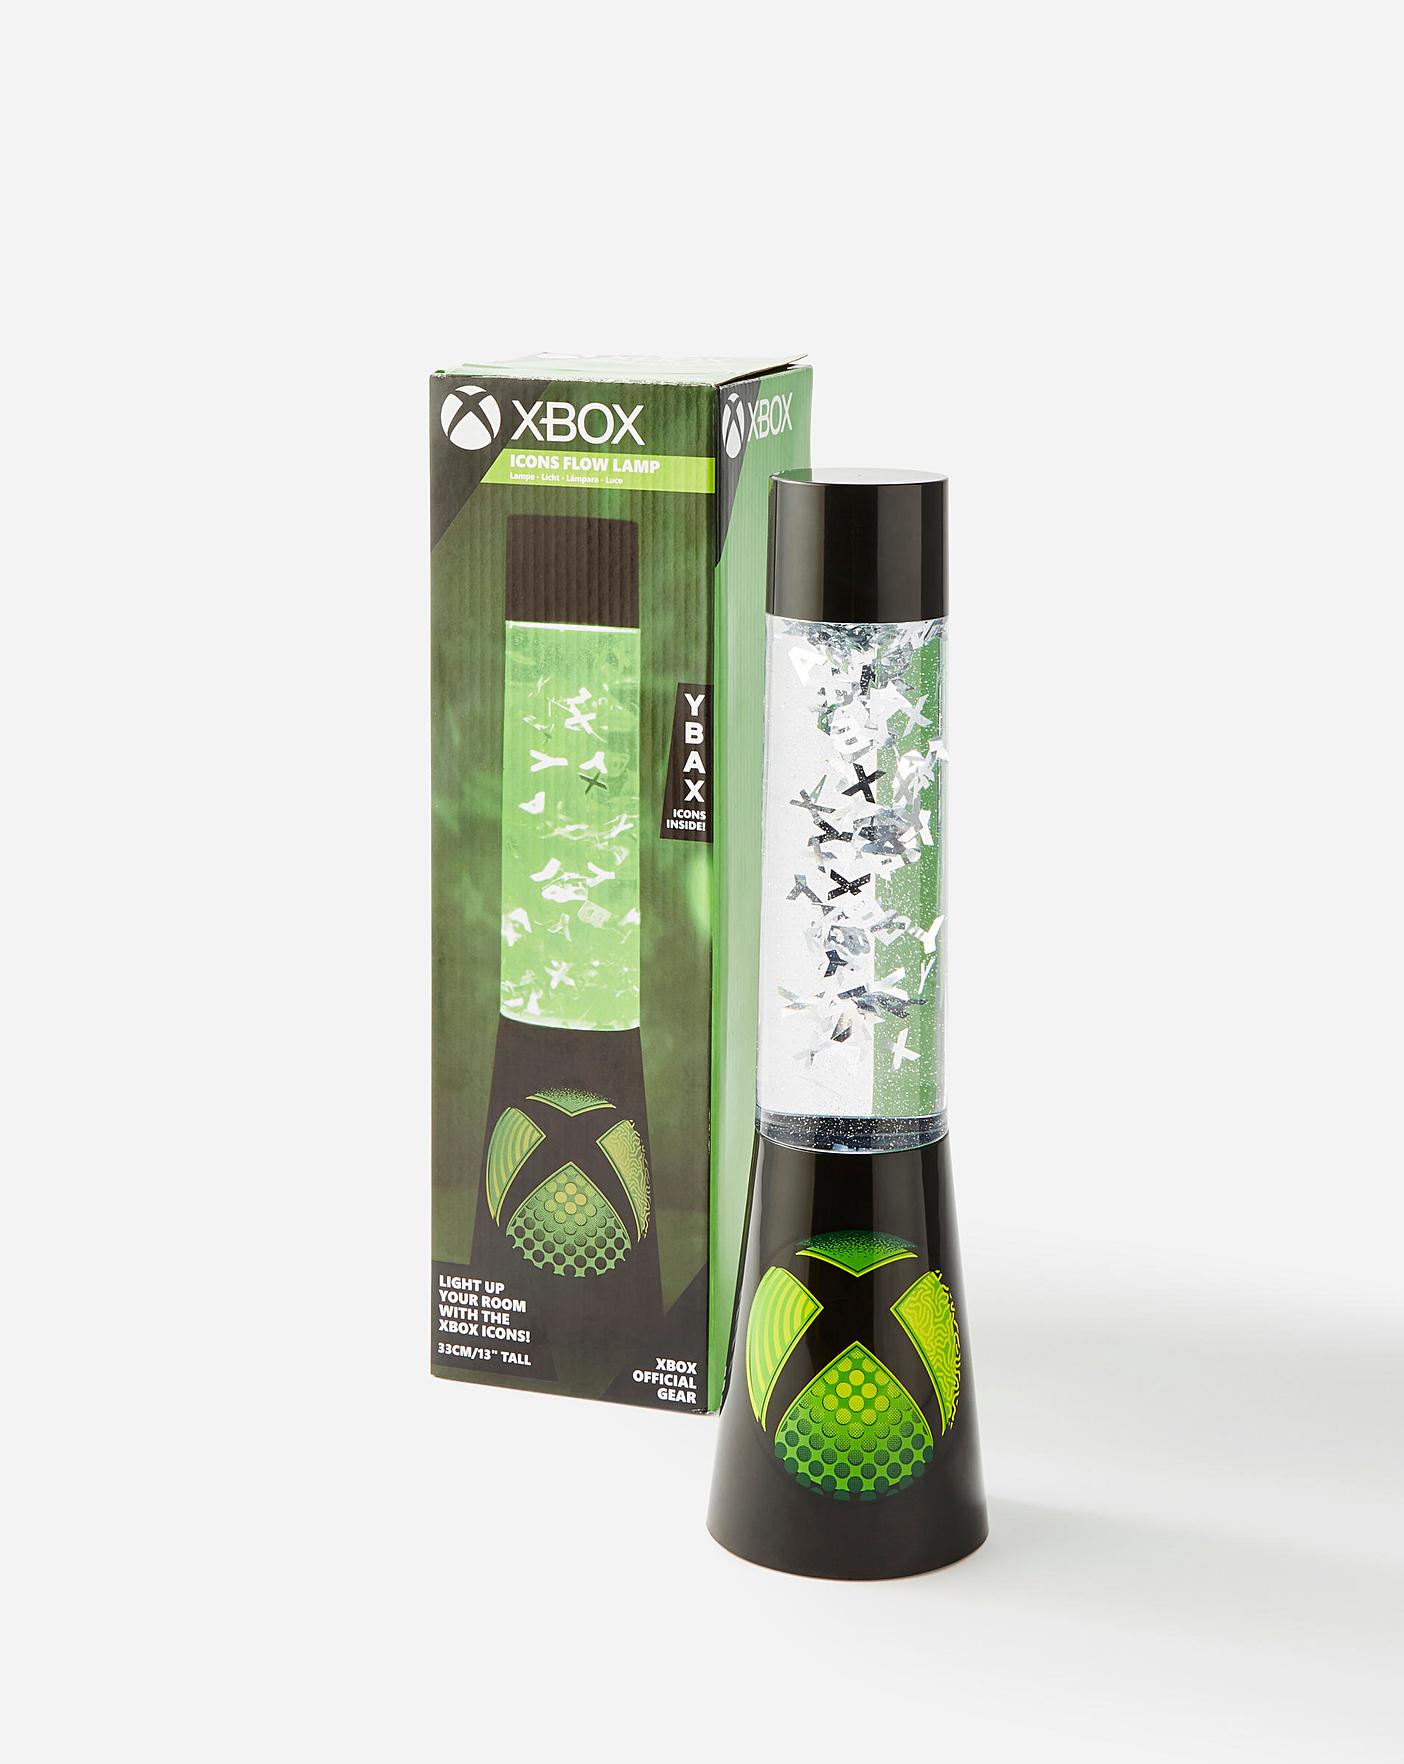 XBOX - Xbox - Plastic Flow Lamp 33cm : : Lampe